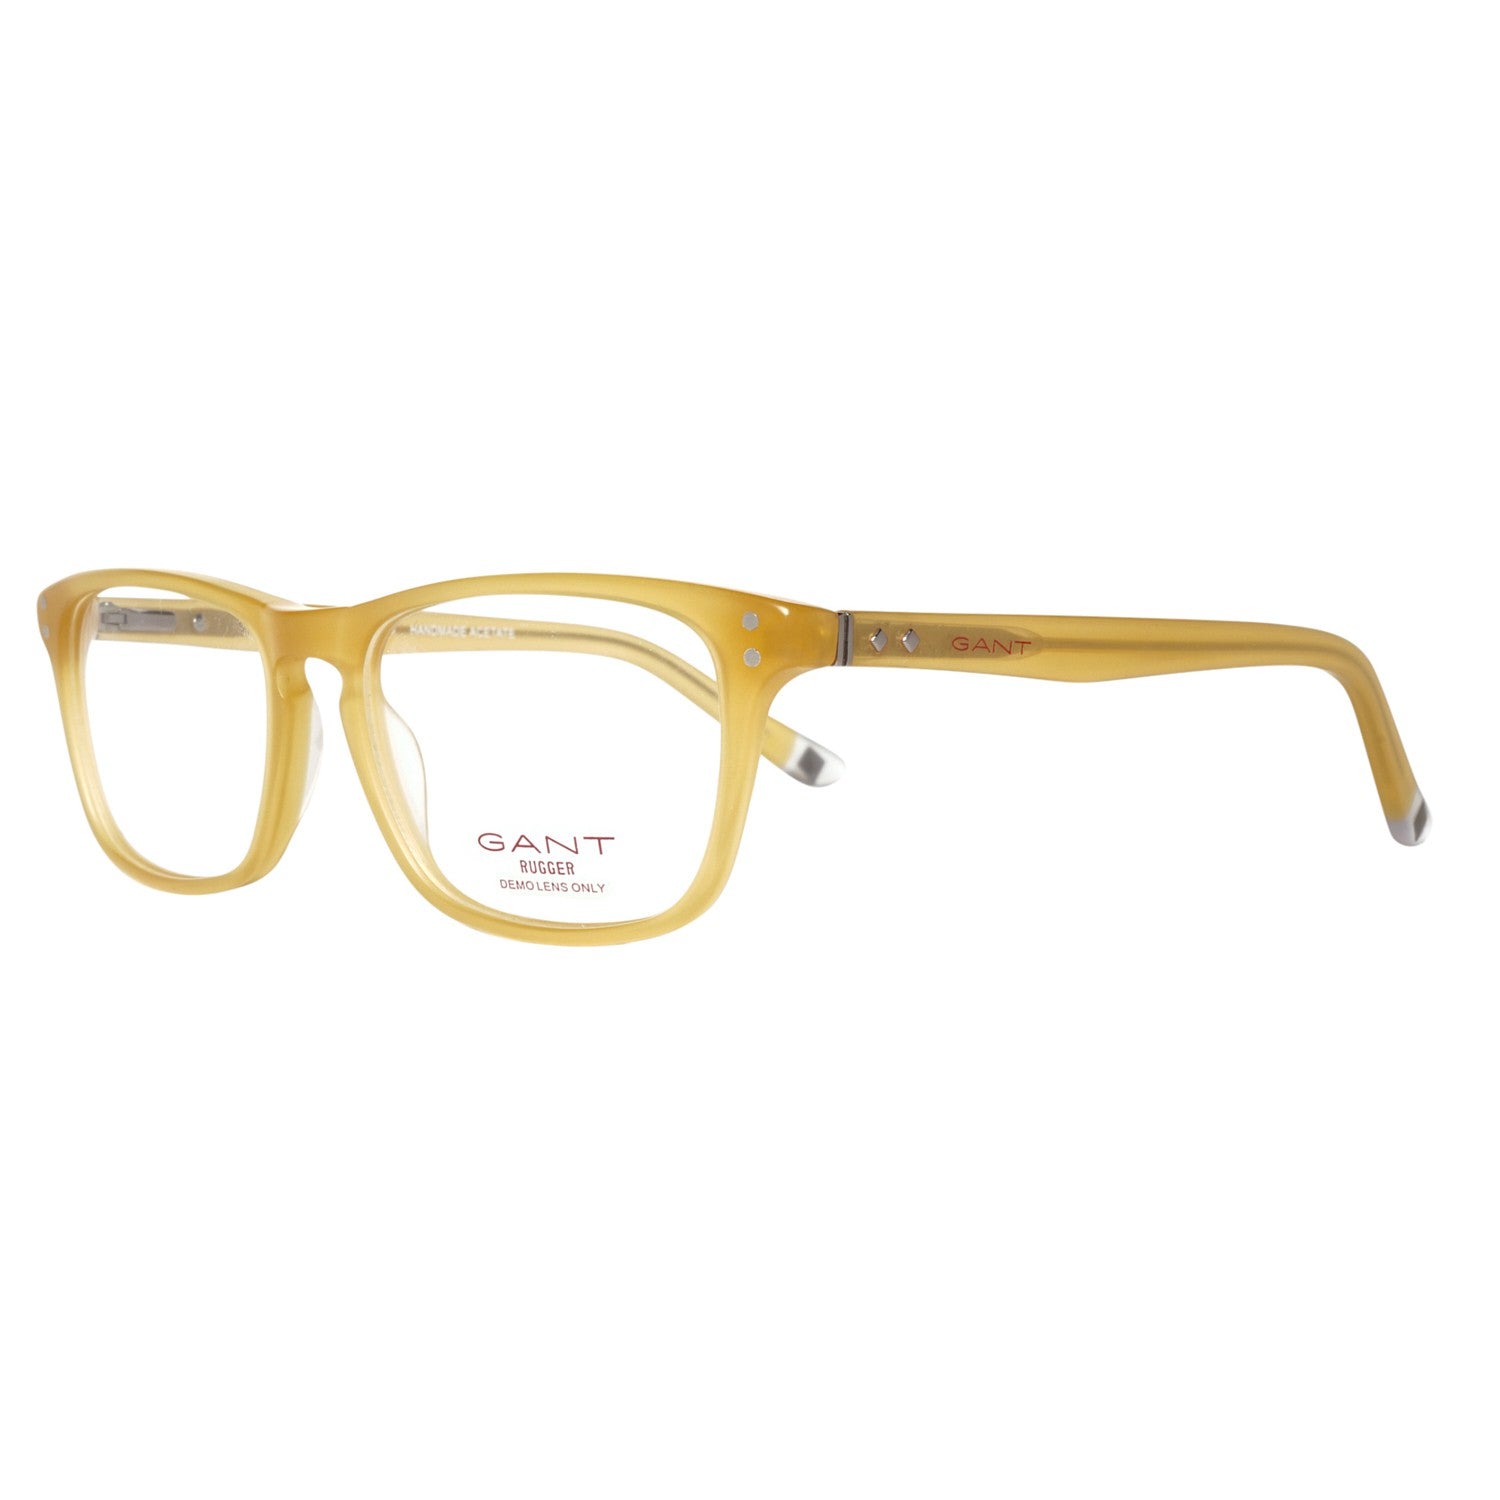 Gant Frames Gant Glasses Frames GRA104 L69 52 | GR 5008 MHNY 52 Eyeglasses Eyewear UK USA Australia 